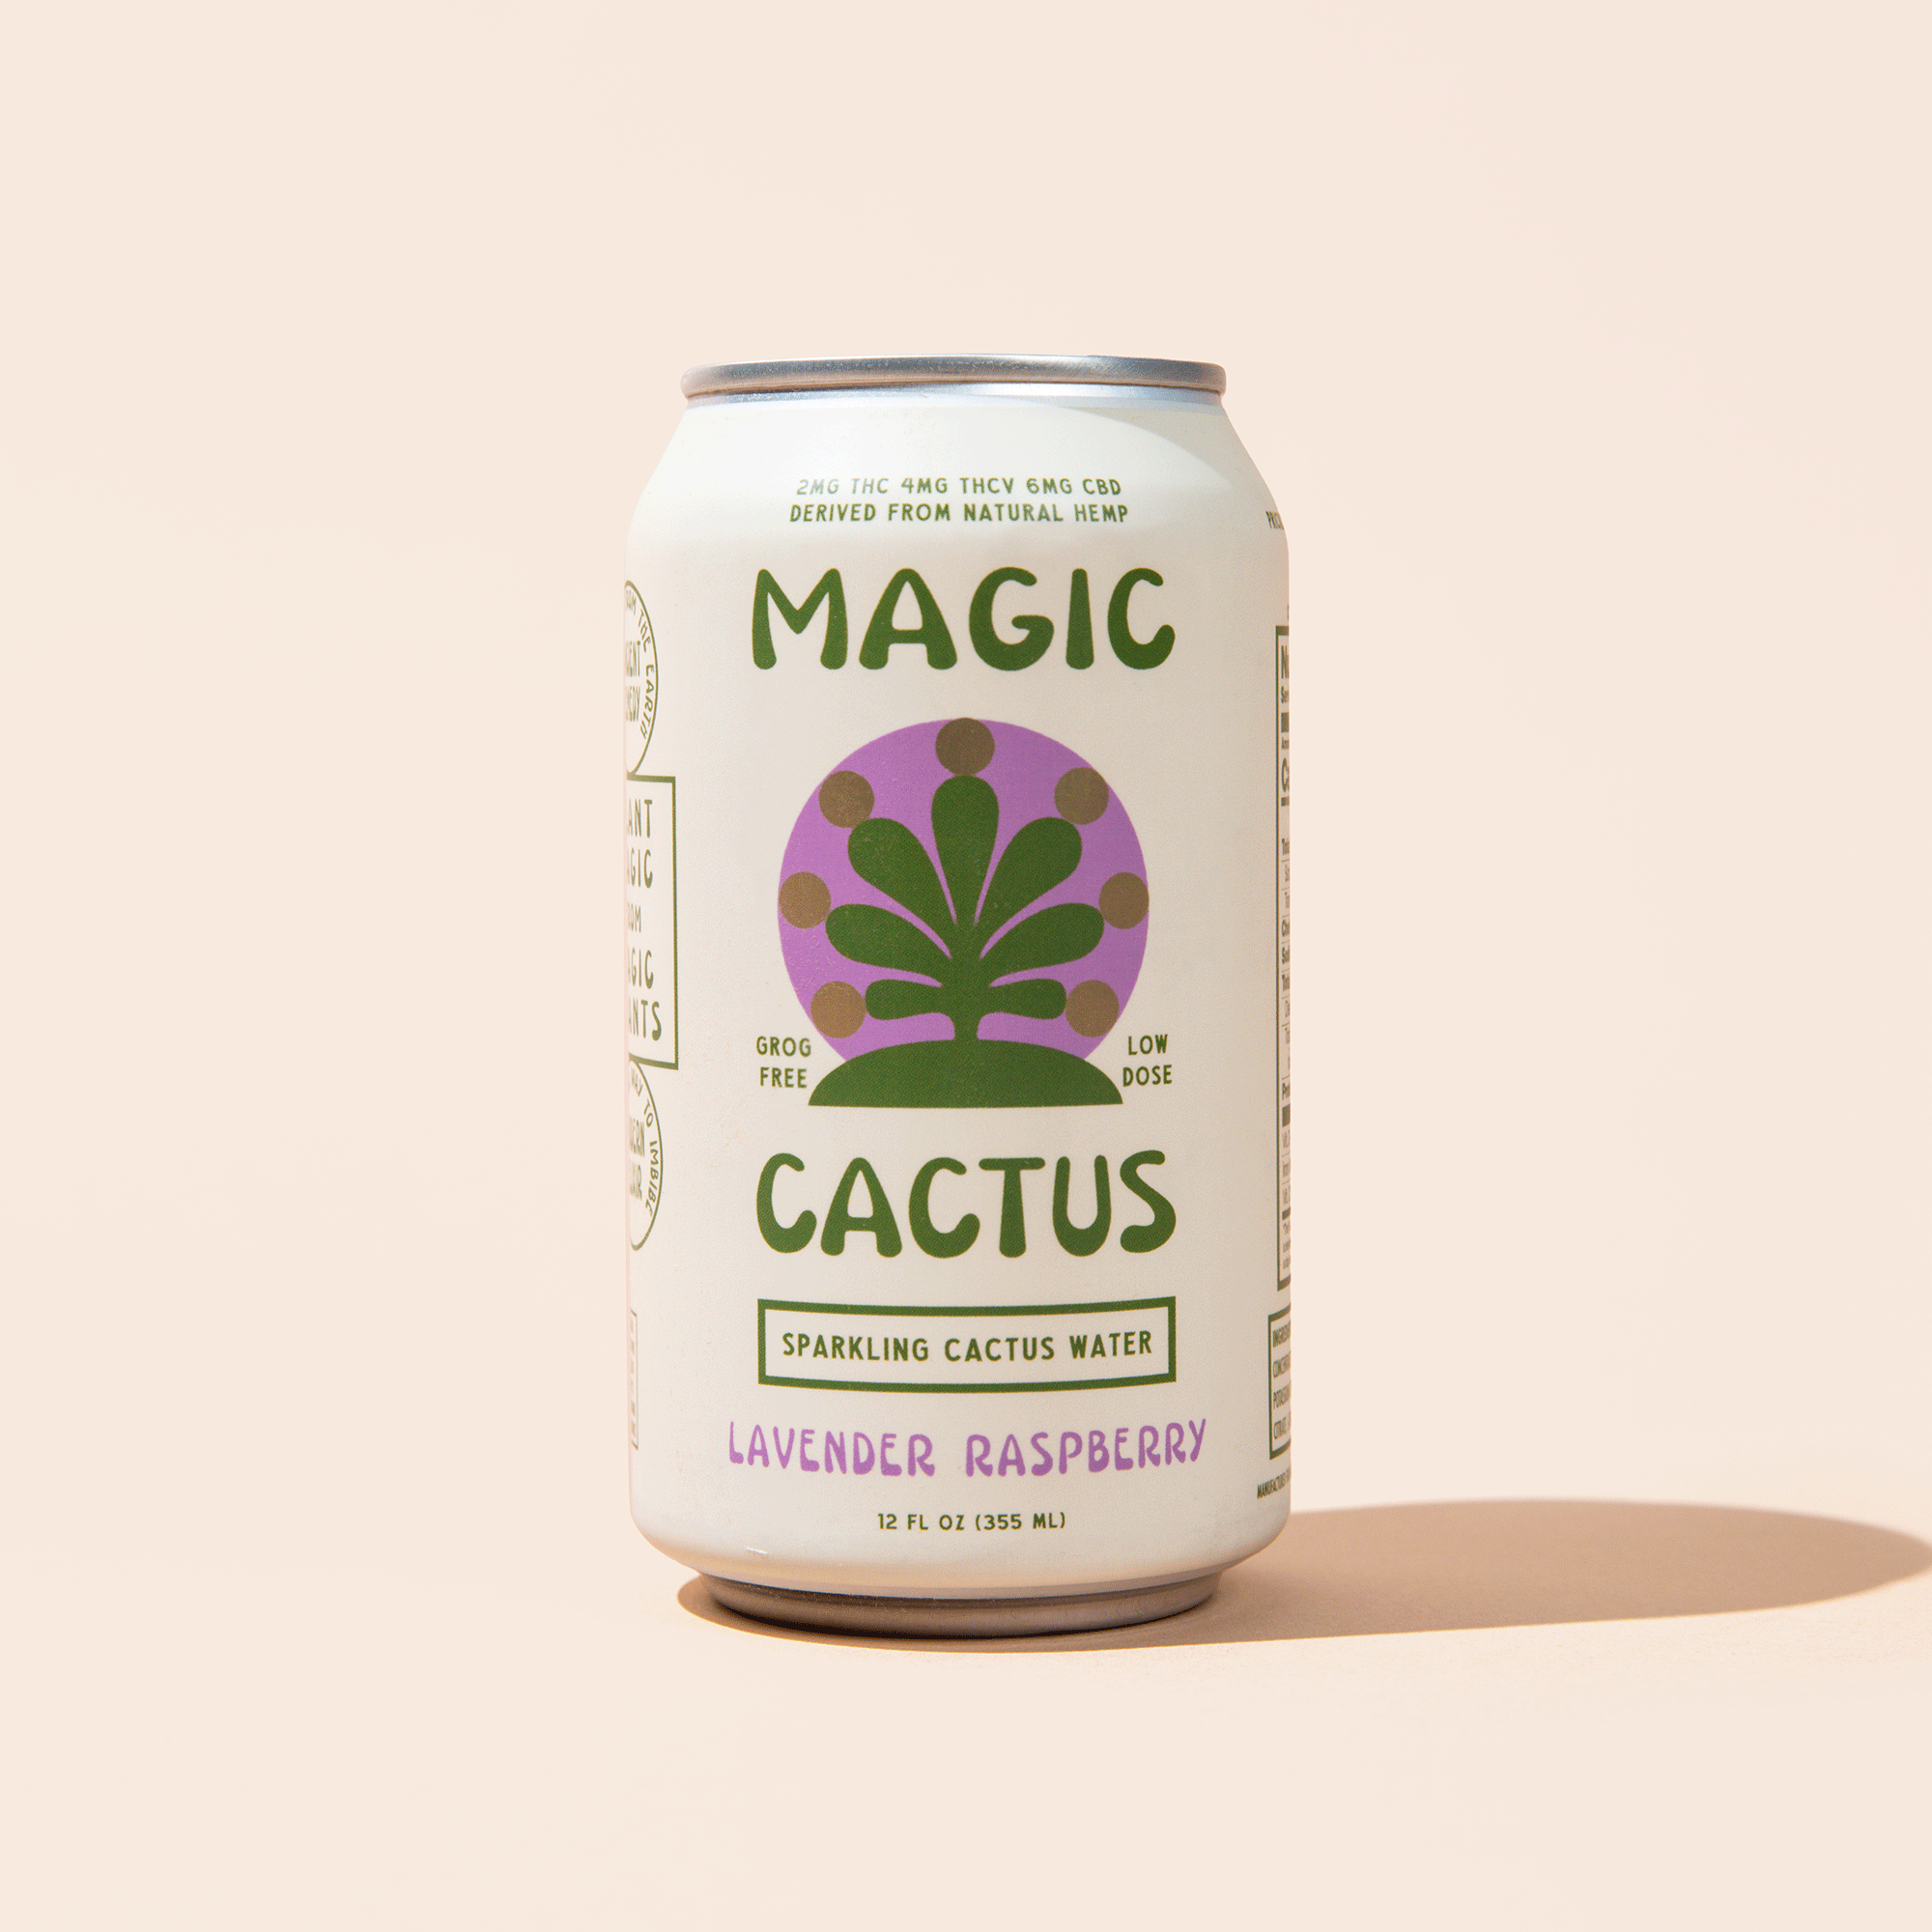 Magic Cactus - Sparkling Cactus Water - Lavender Raspberry - 2mg THC 4mg THCV 6mg CBD